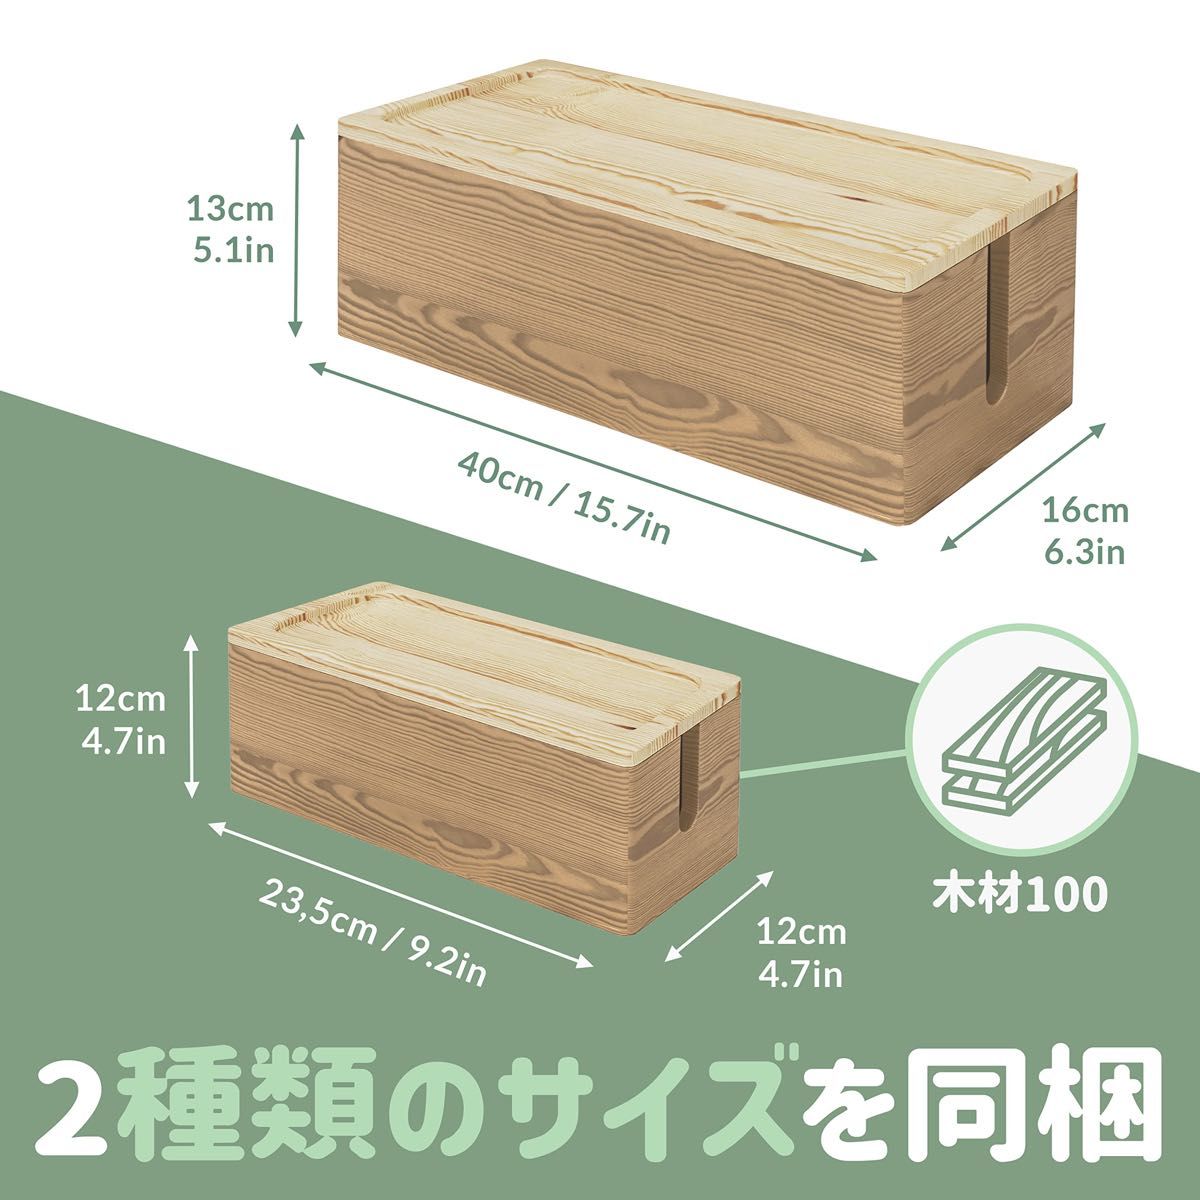 NATURE SUPPLIES｜木製ケーブル収納ボックス ホワイト【2個セット】